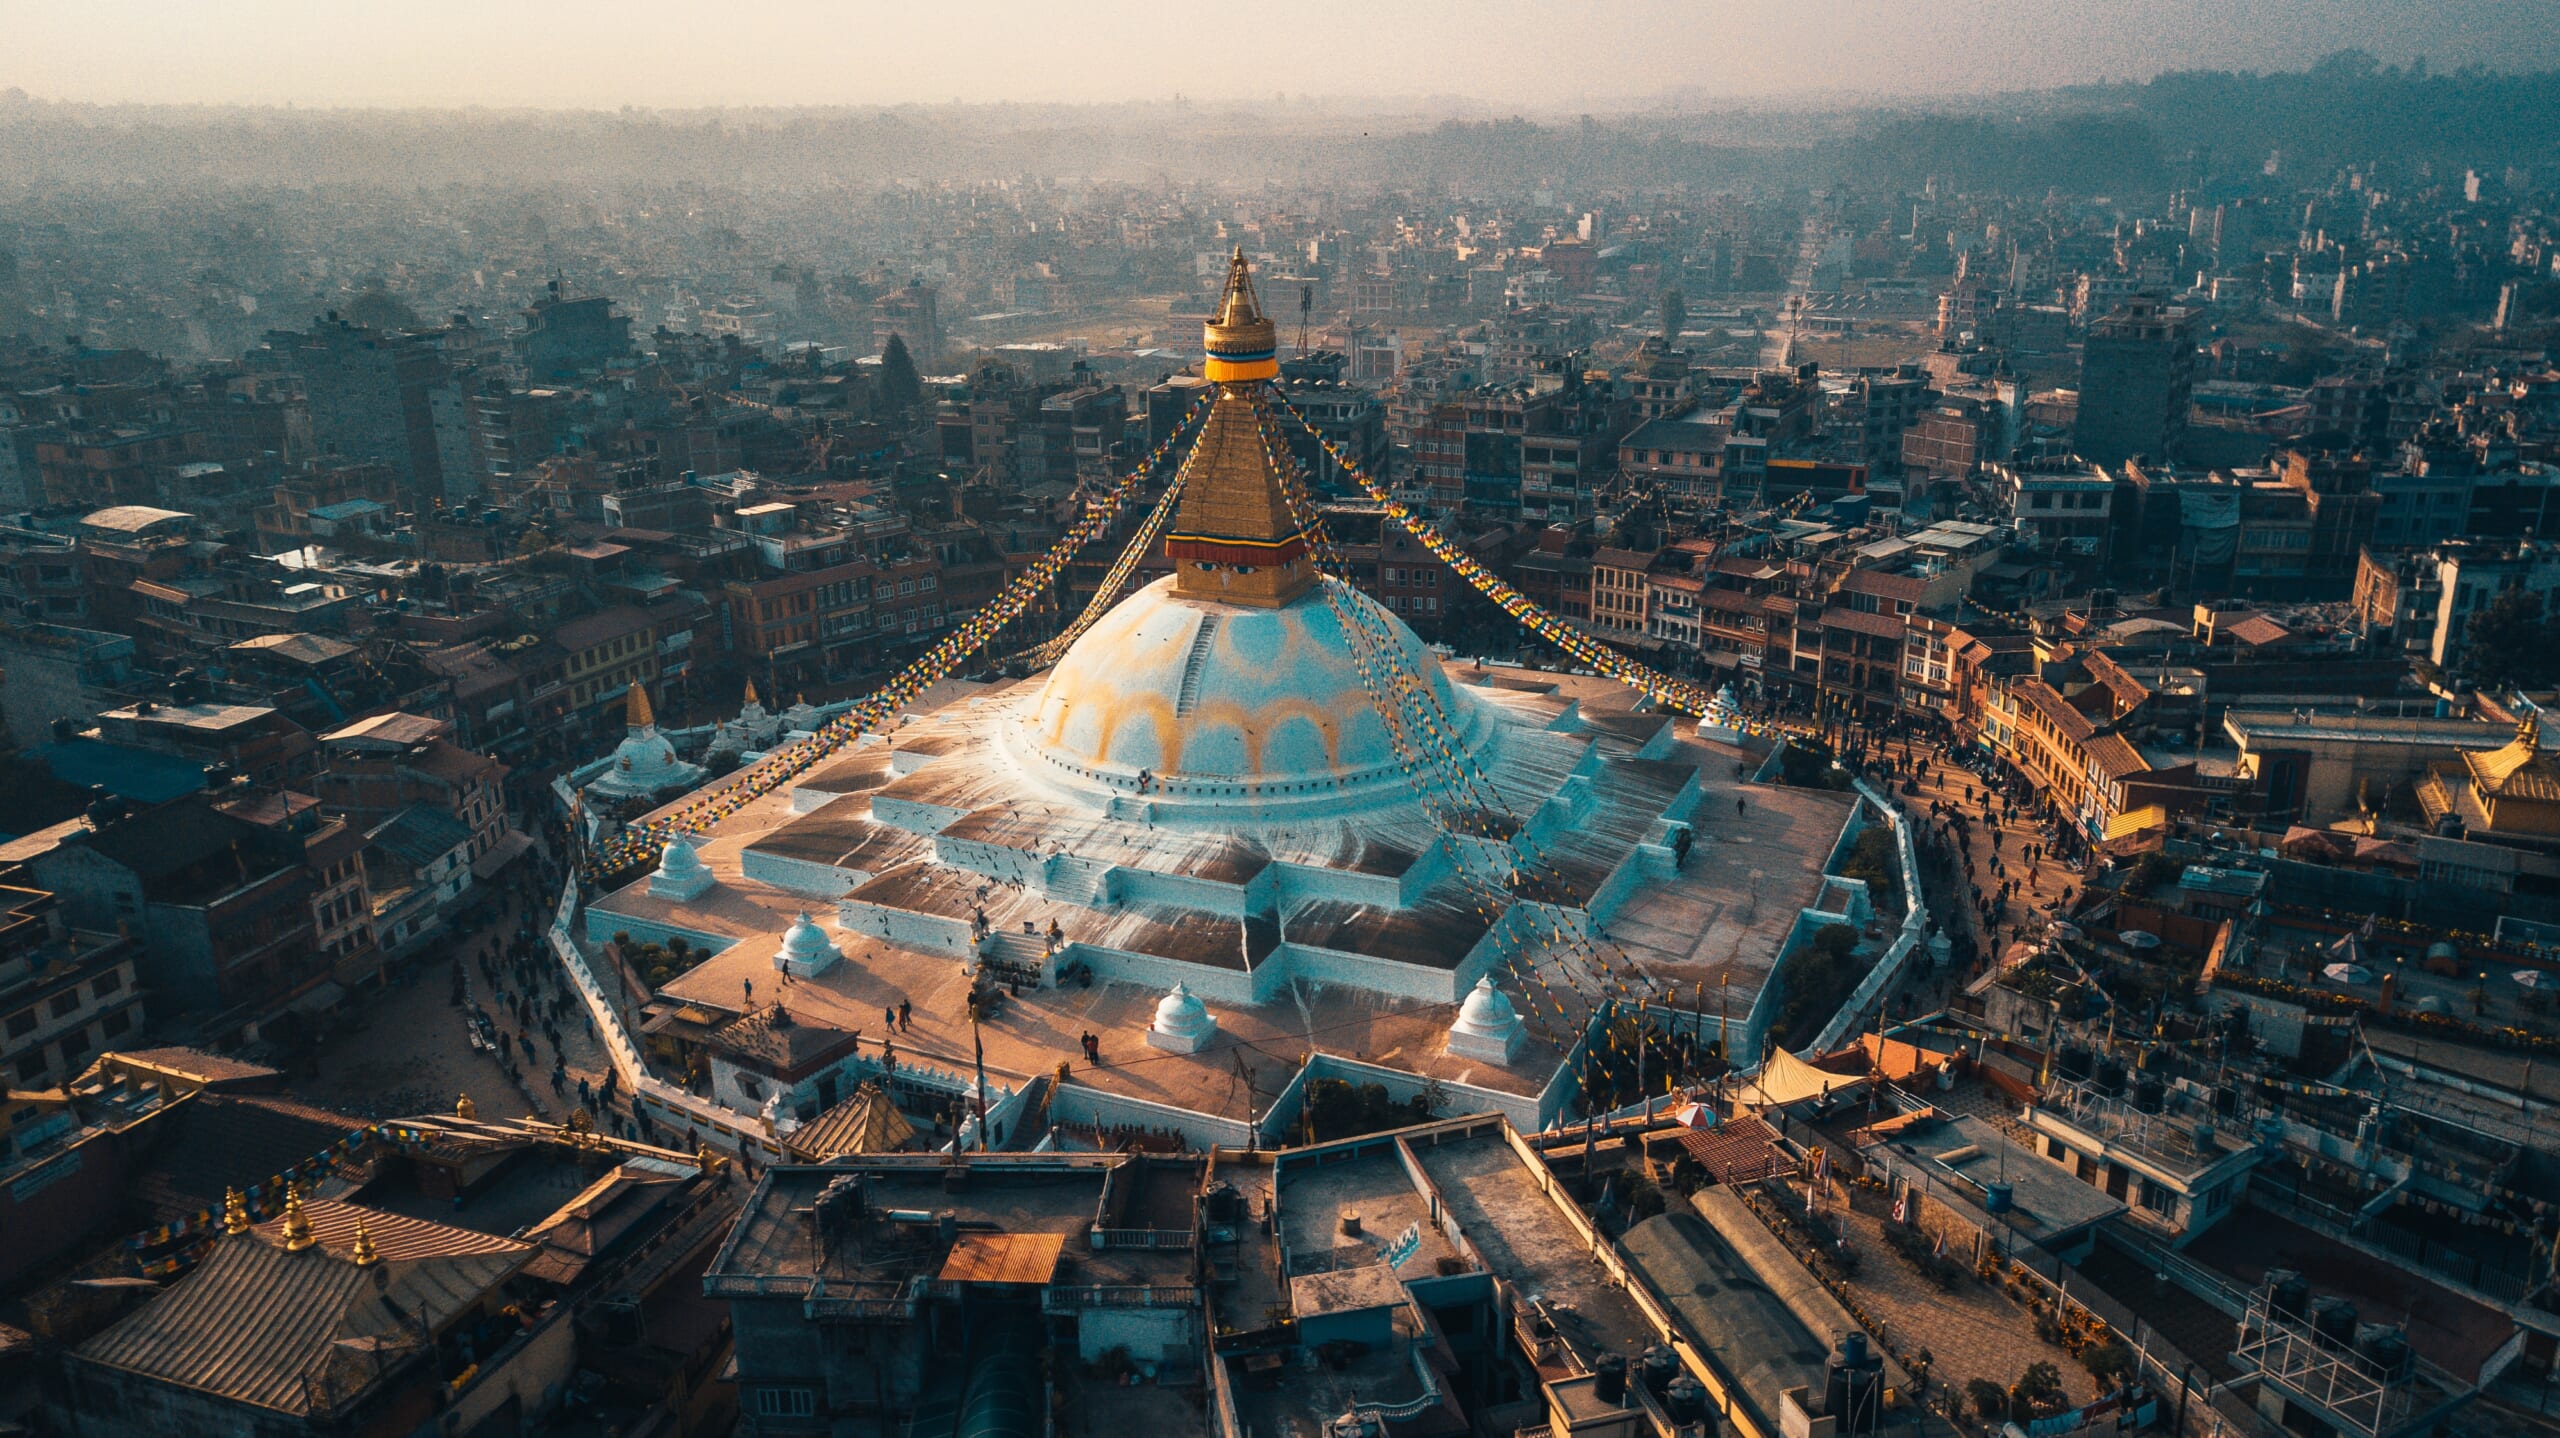 Stupa Boudhanath Kathmandu, Nepal Photo by Raimond Klavins on Unsplash